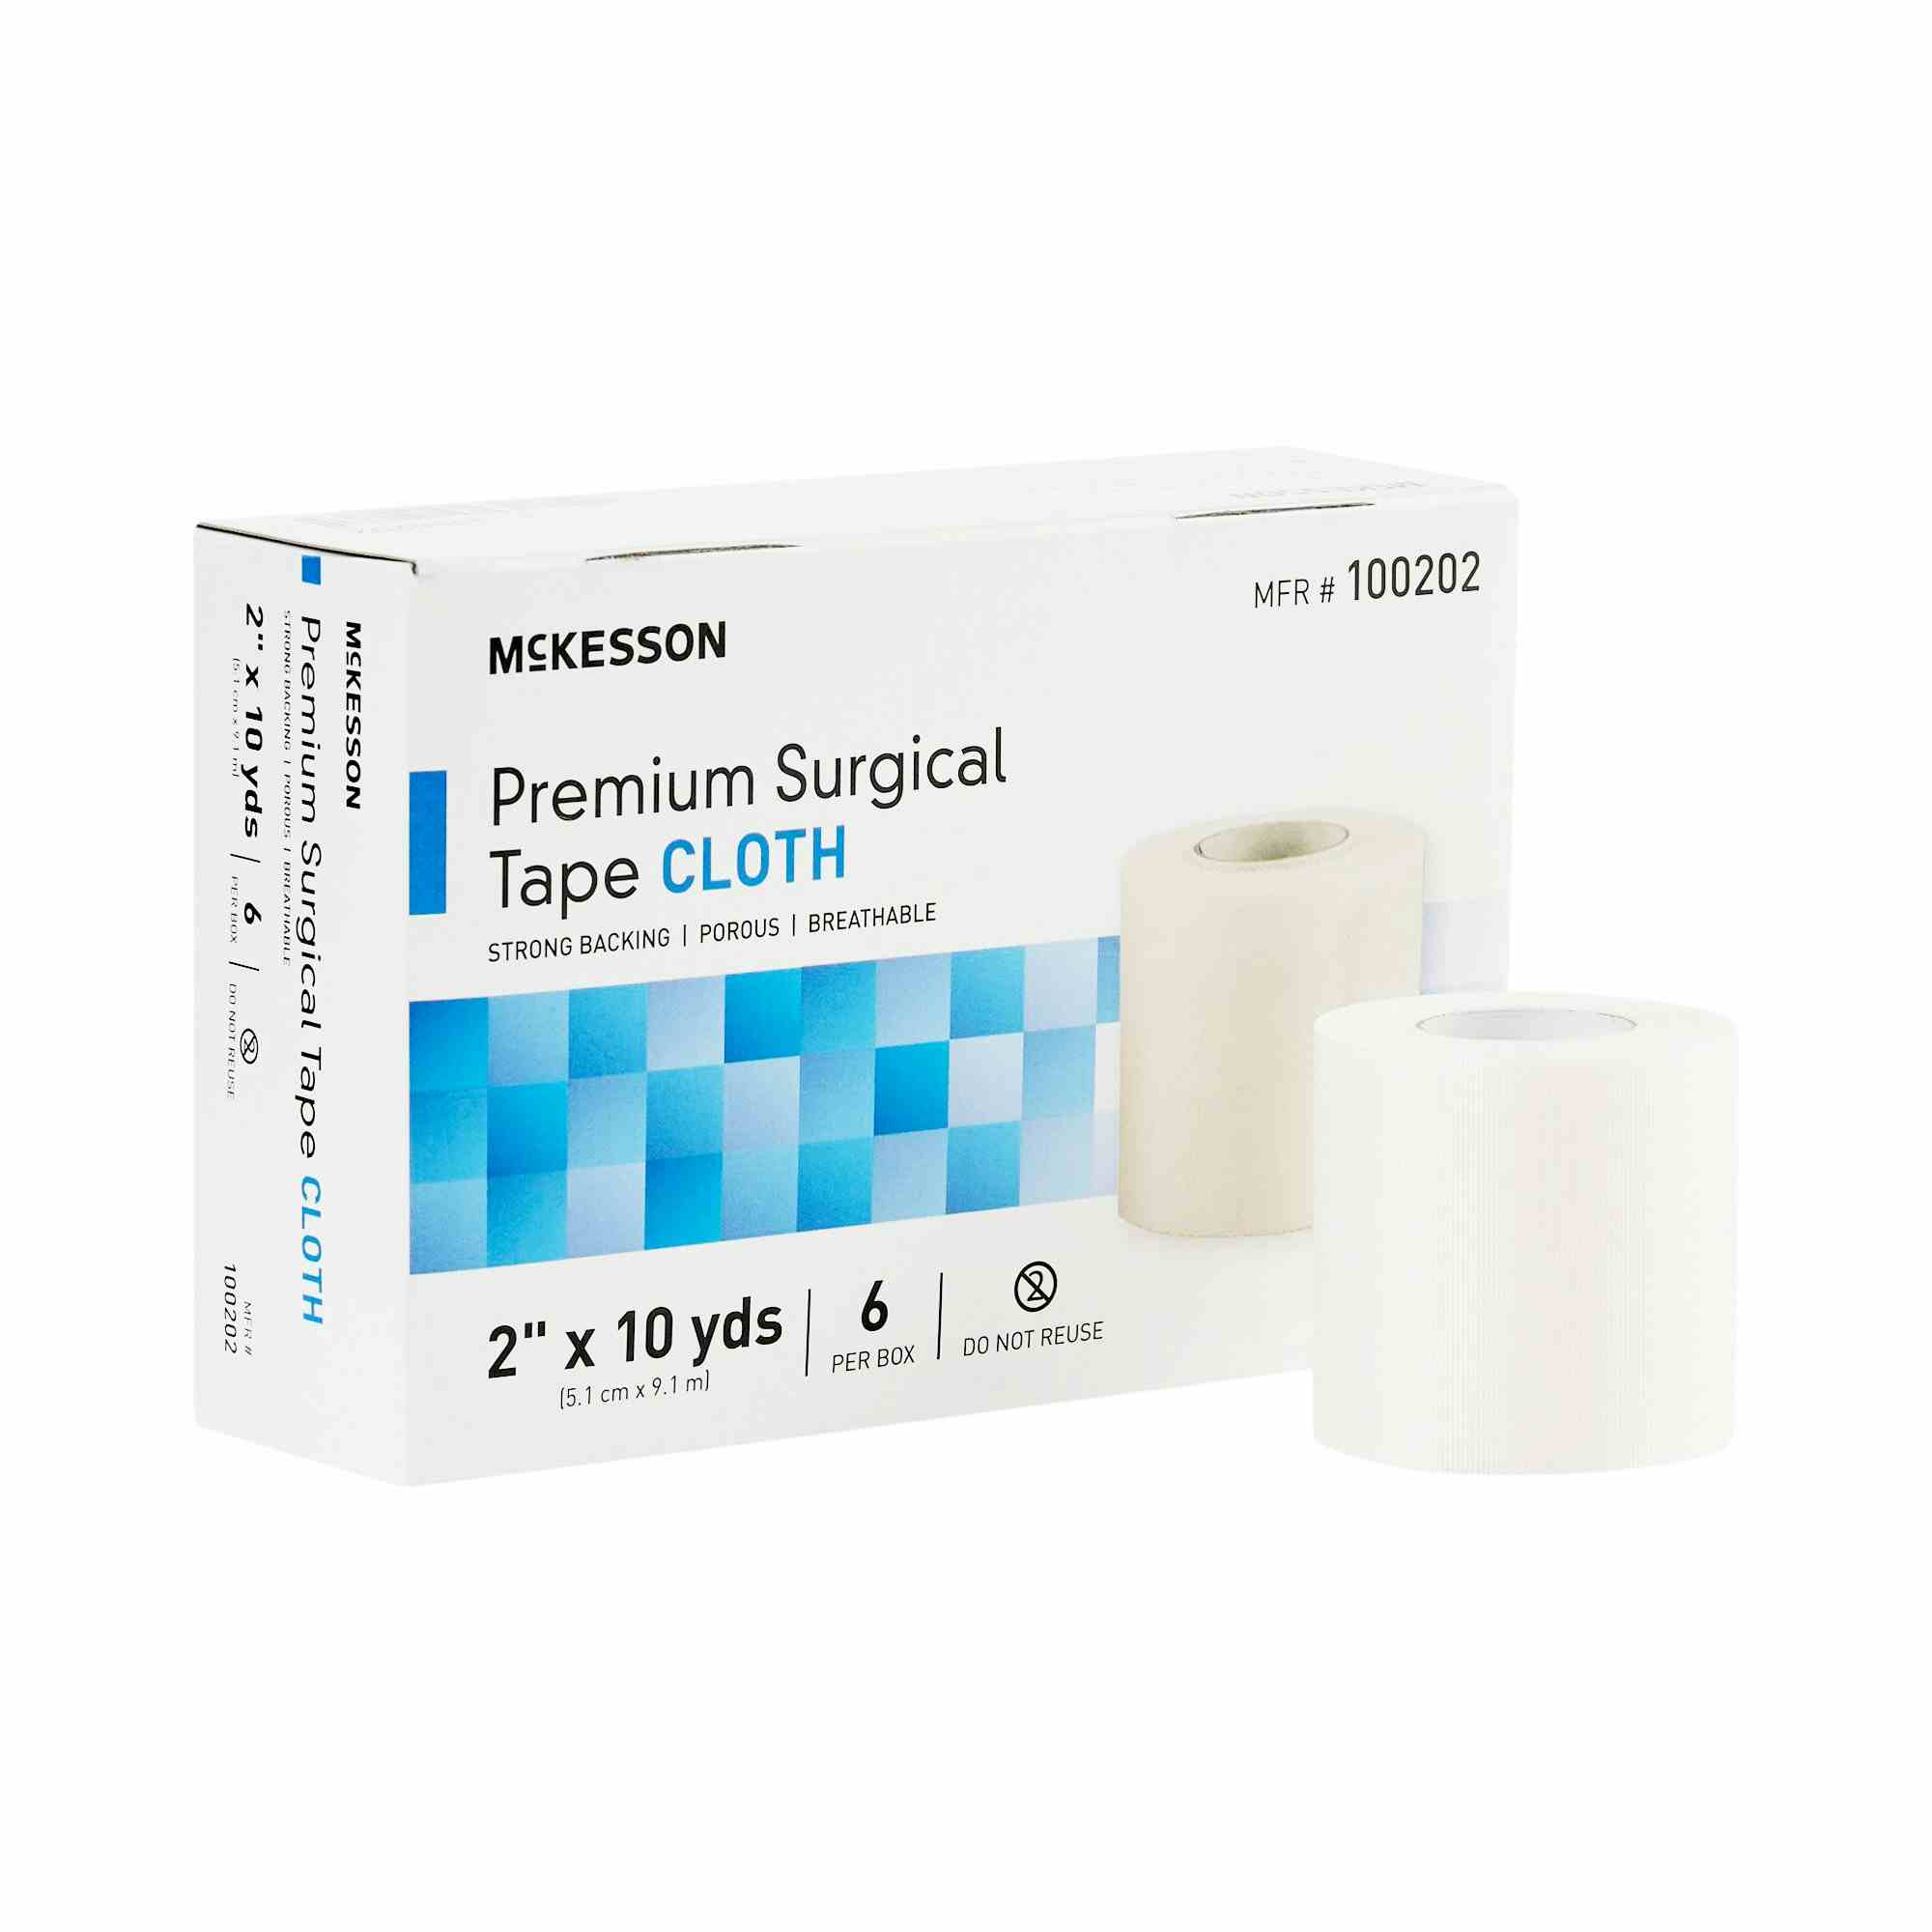 McKesson Premium Surgical Tape Cloth, 2" X 10 yds, 100202, Box of 6